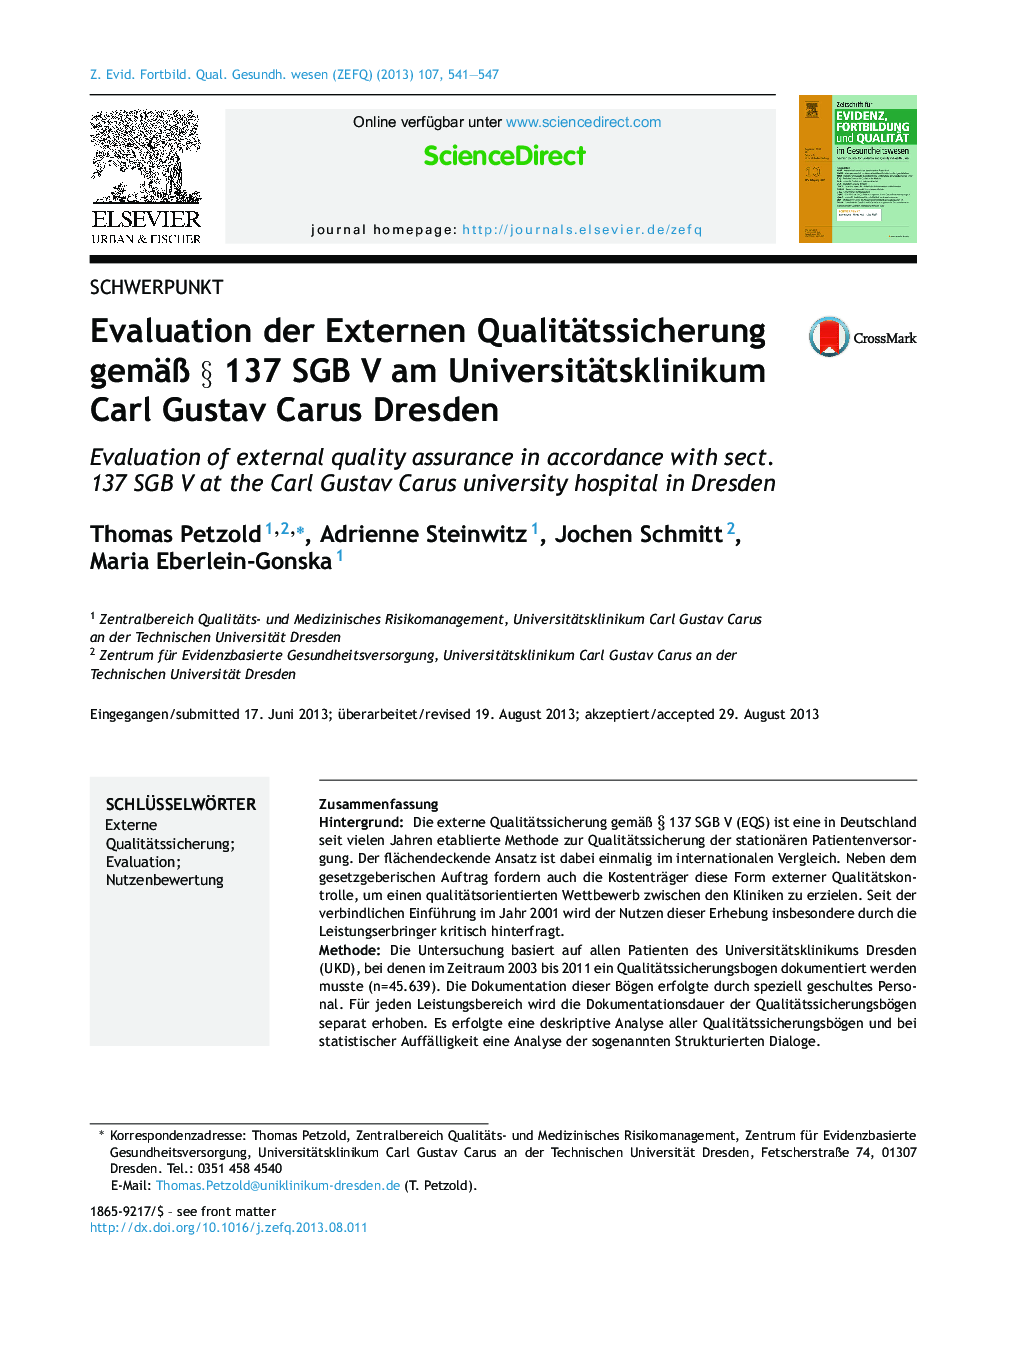 Evaluation der Externen Qualitätssicherung gemäß § 137 SGB V am Universitätsklinikum Carl Gustav Carus Dresden